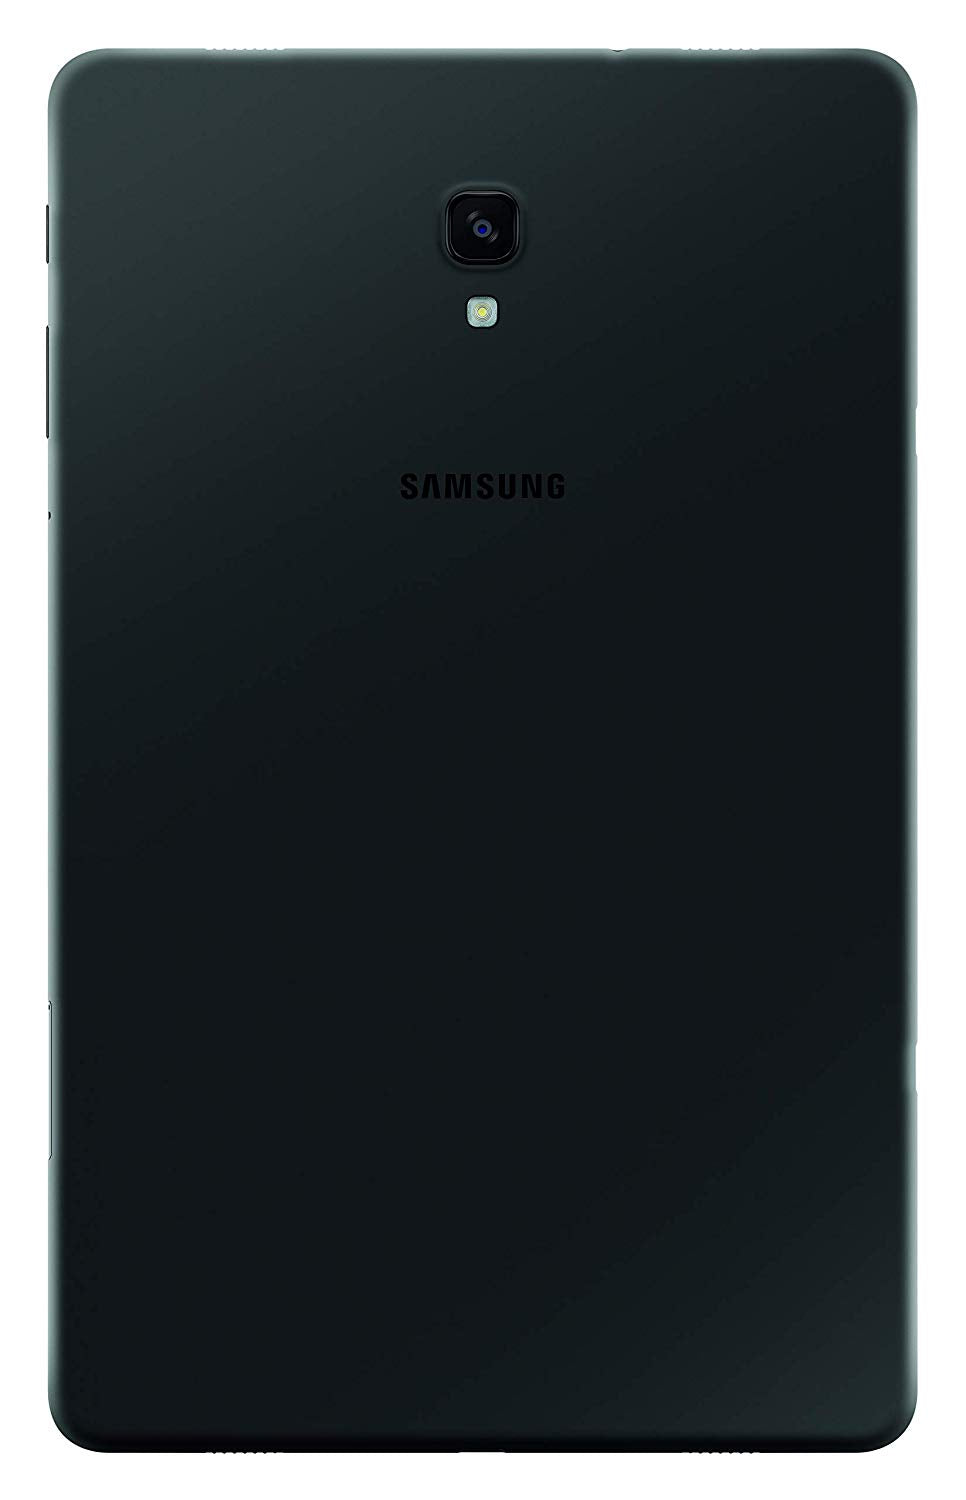 Samsung Galaxy Tab A 10.5 32GB Tablet, Black - Model SM-T590NZKAXAR